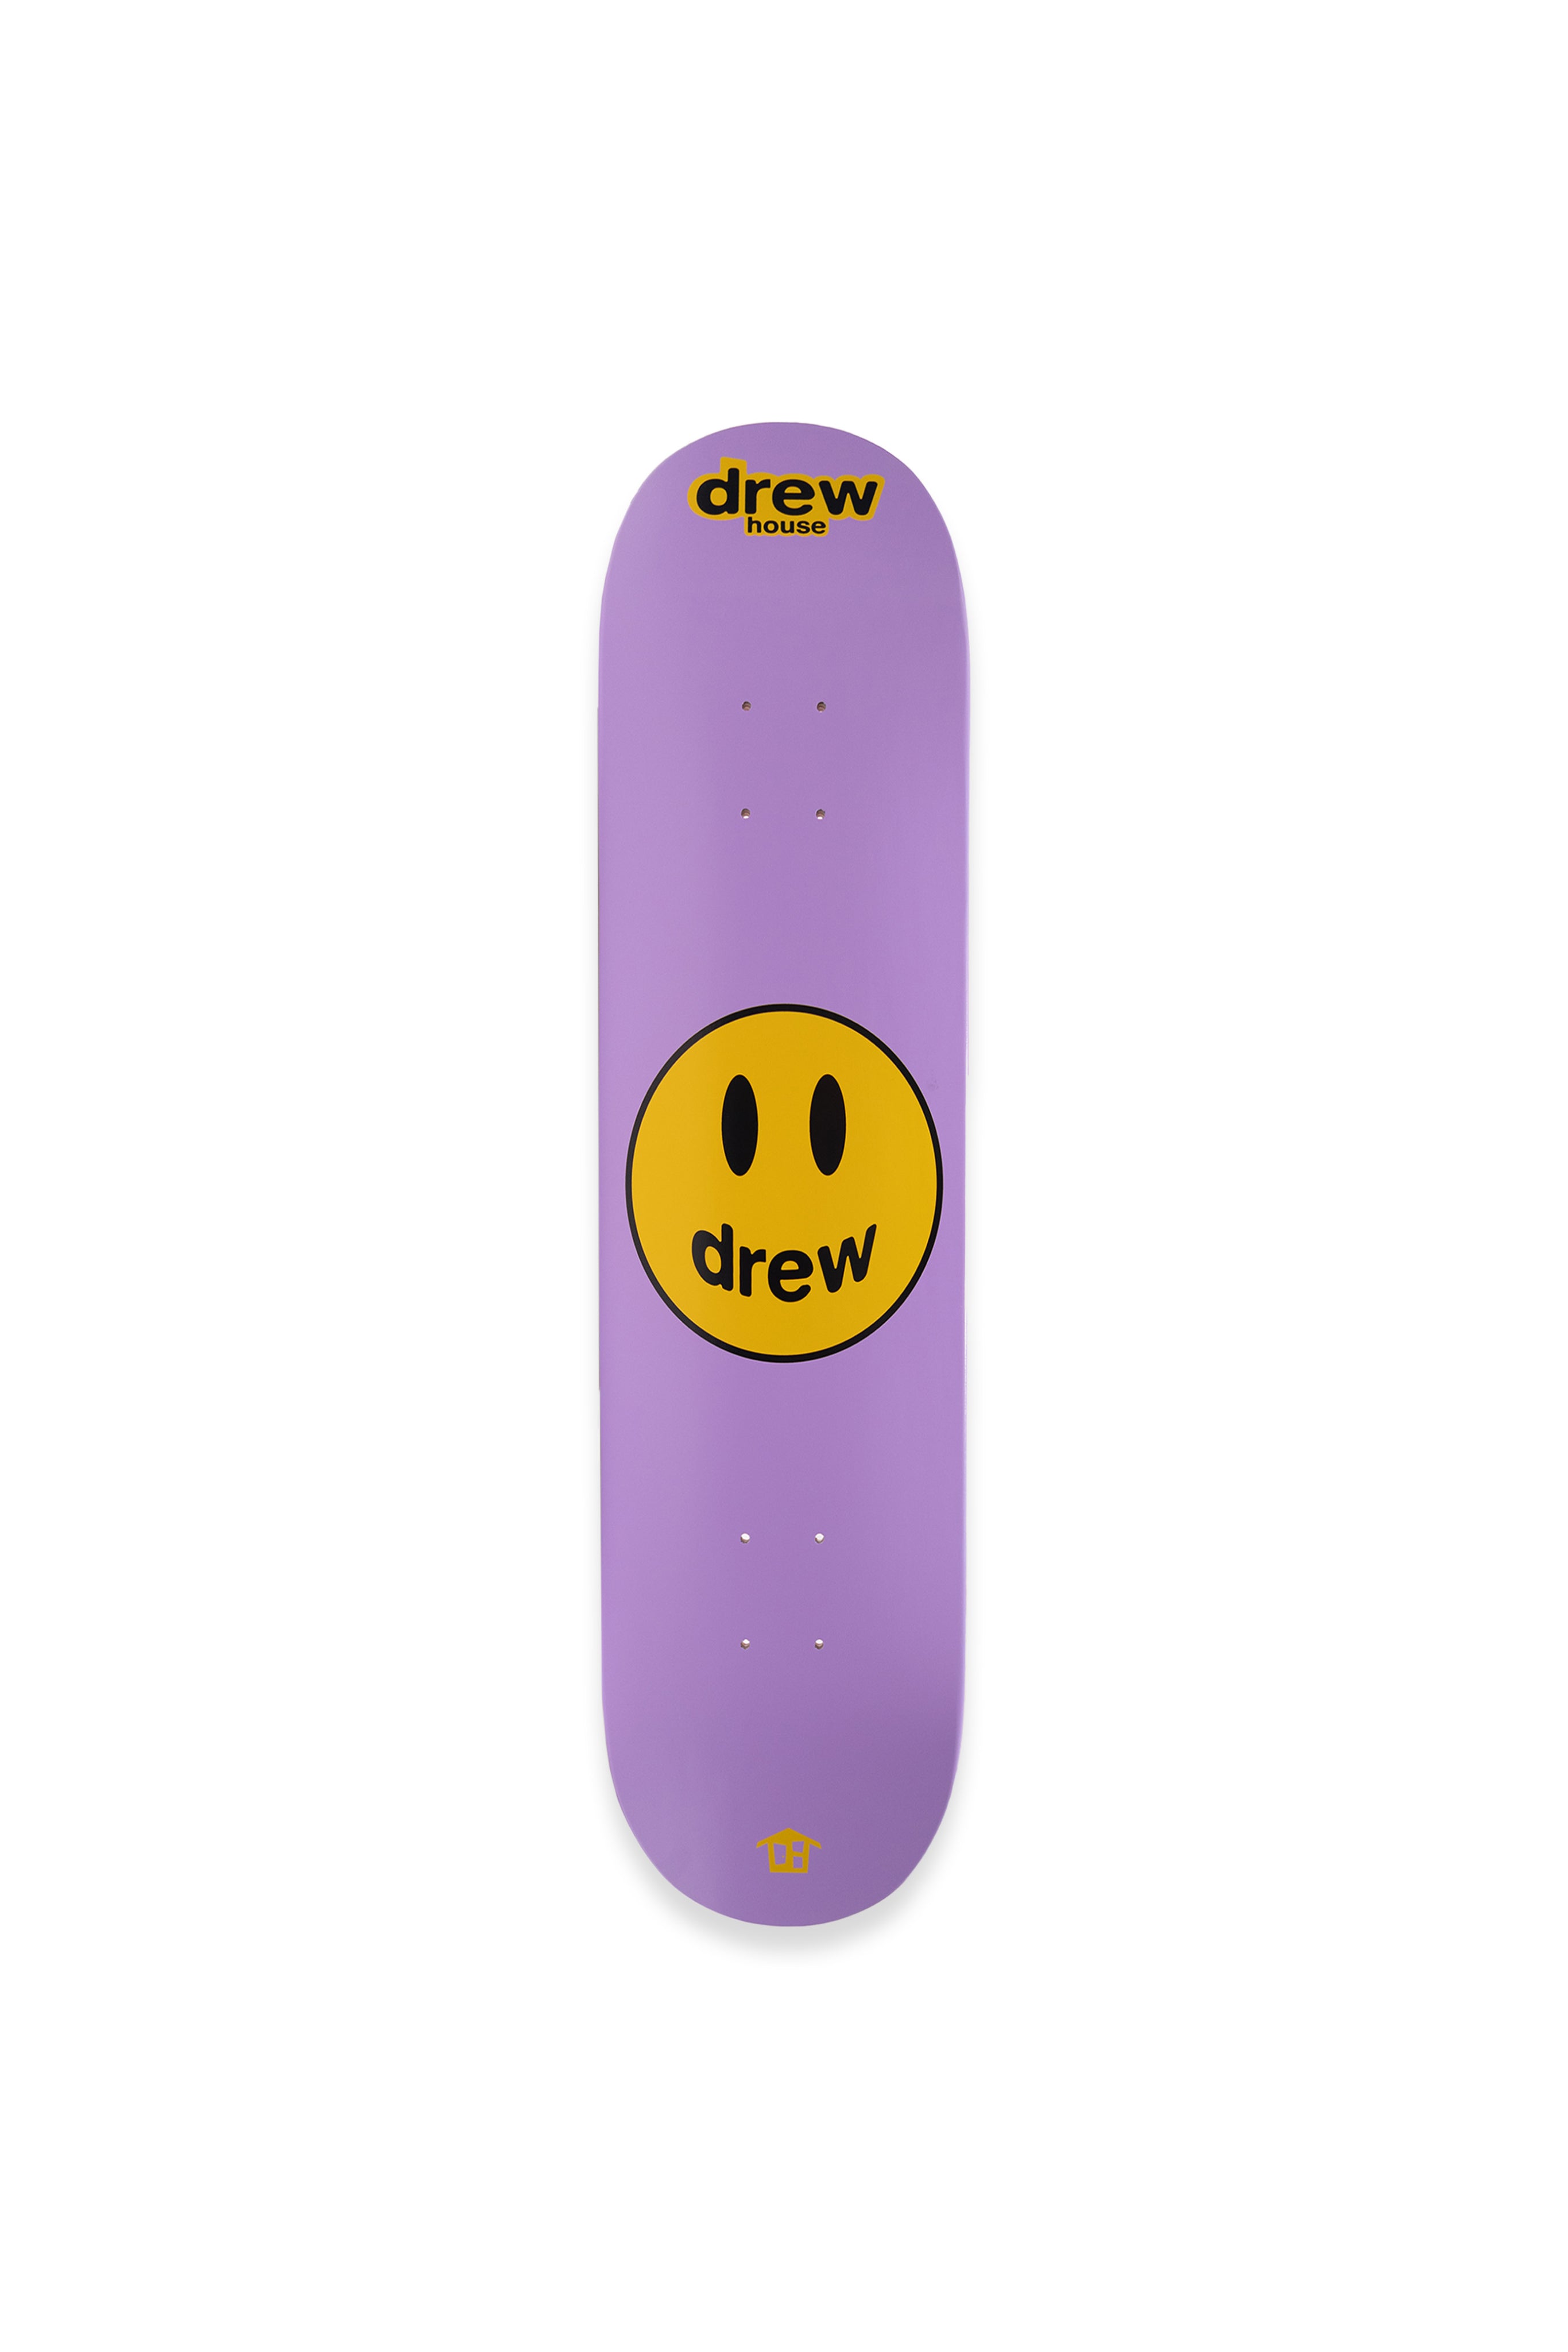 drewhouse skate deck